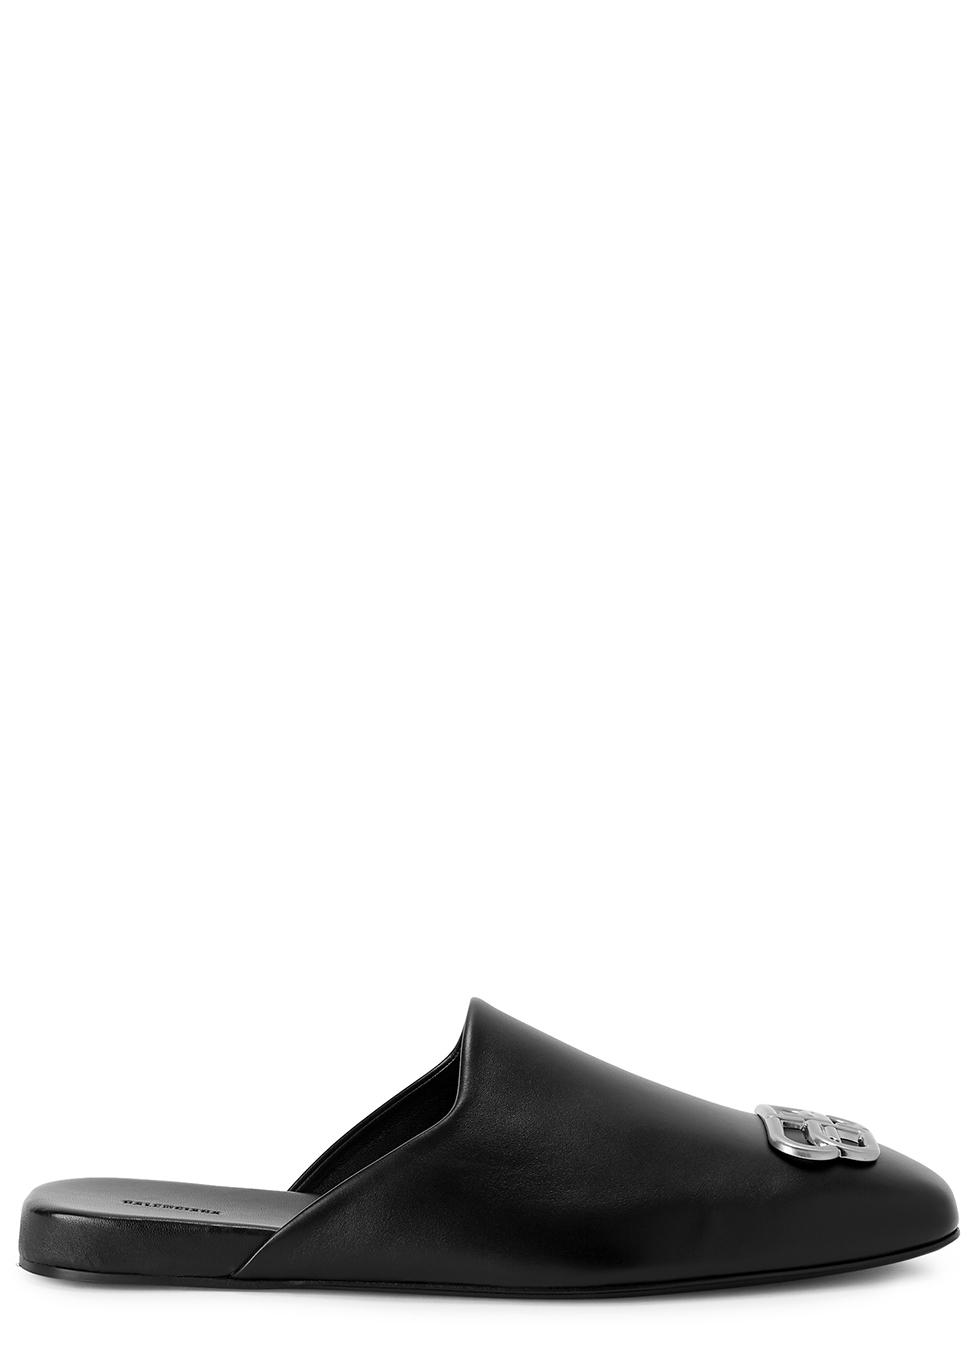 Balenciaga Bb Black Logo Leather Mules for Men - Lyst